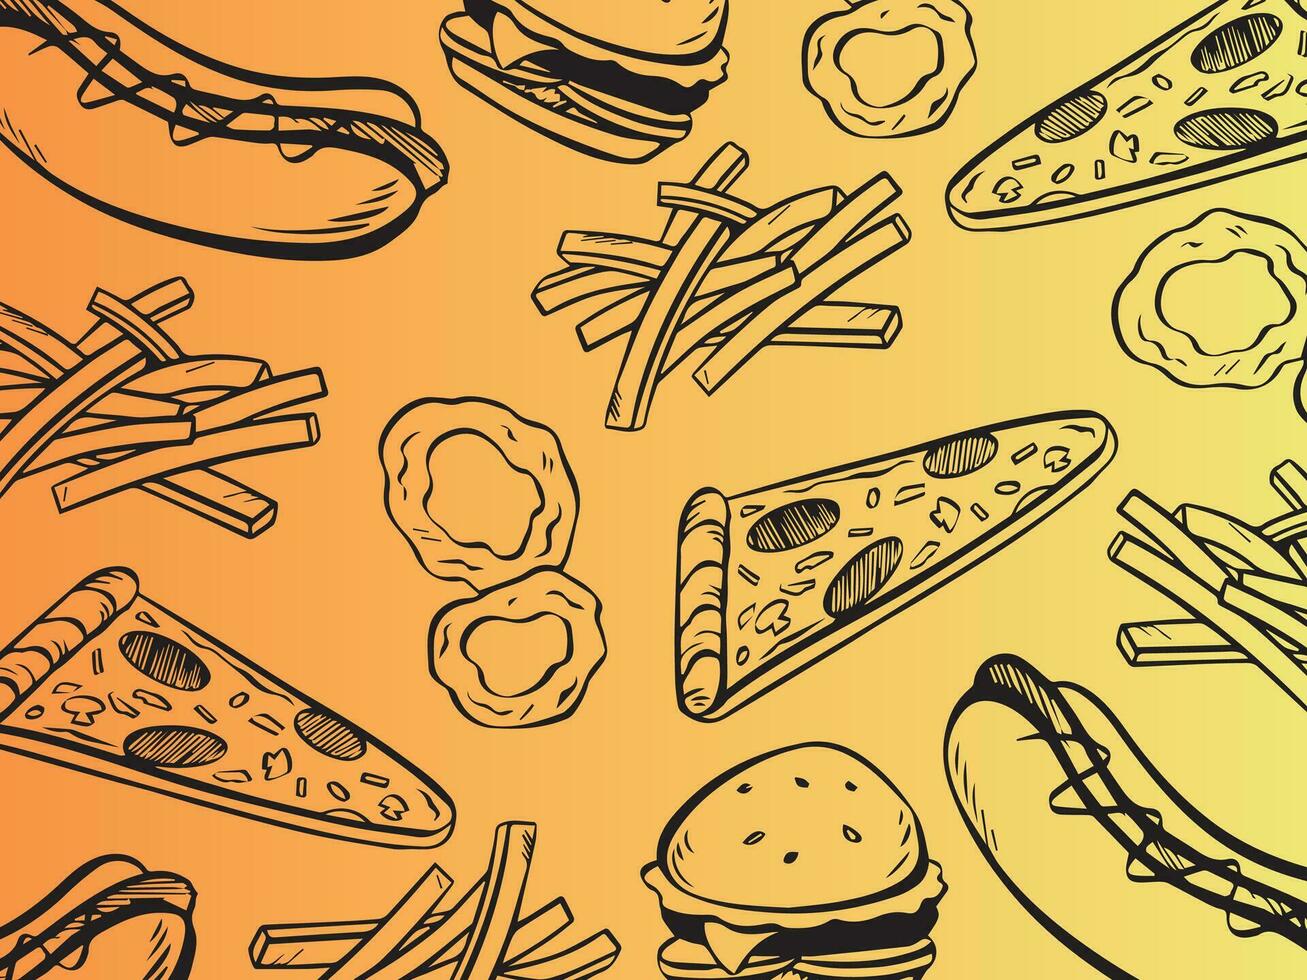 rápido americano comida negro resumido vector ilustración dibujo aislado en horizontal degradado frito amarillo naranja antecedentes. sencillo bandera póster diseño para rápido comida restaurante.